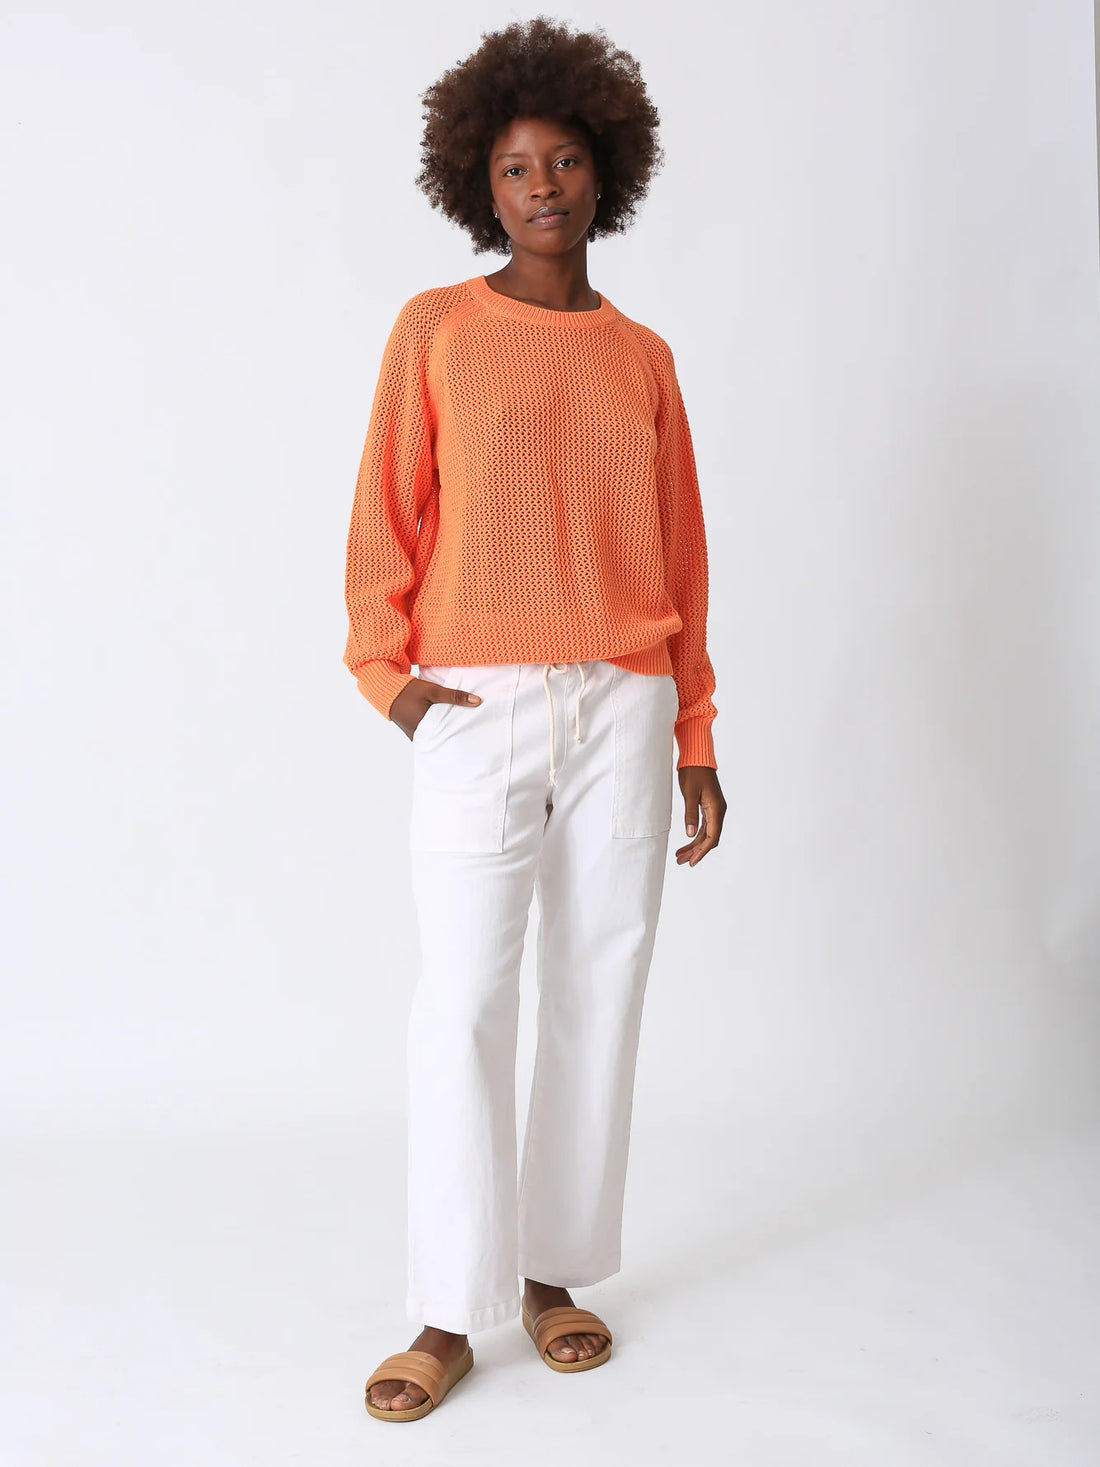 Electric & Rose Chloe Cotton Sweater - Tangerine